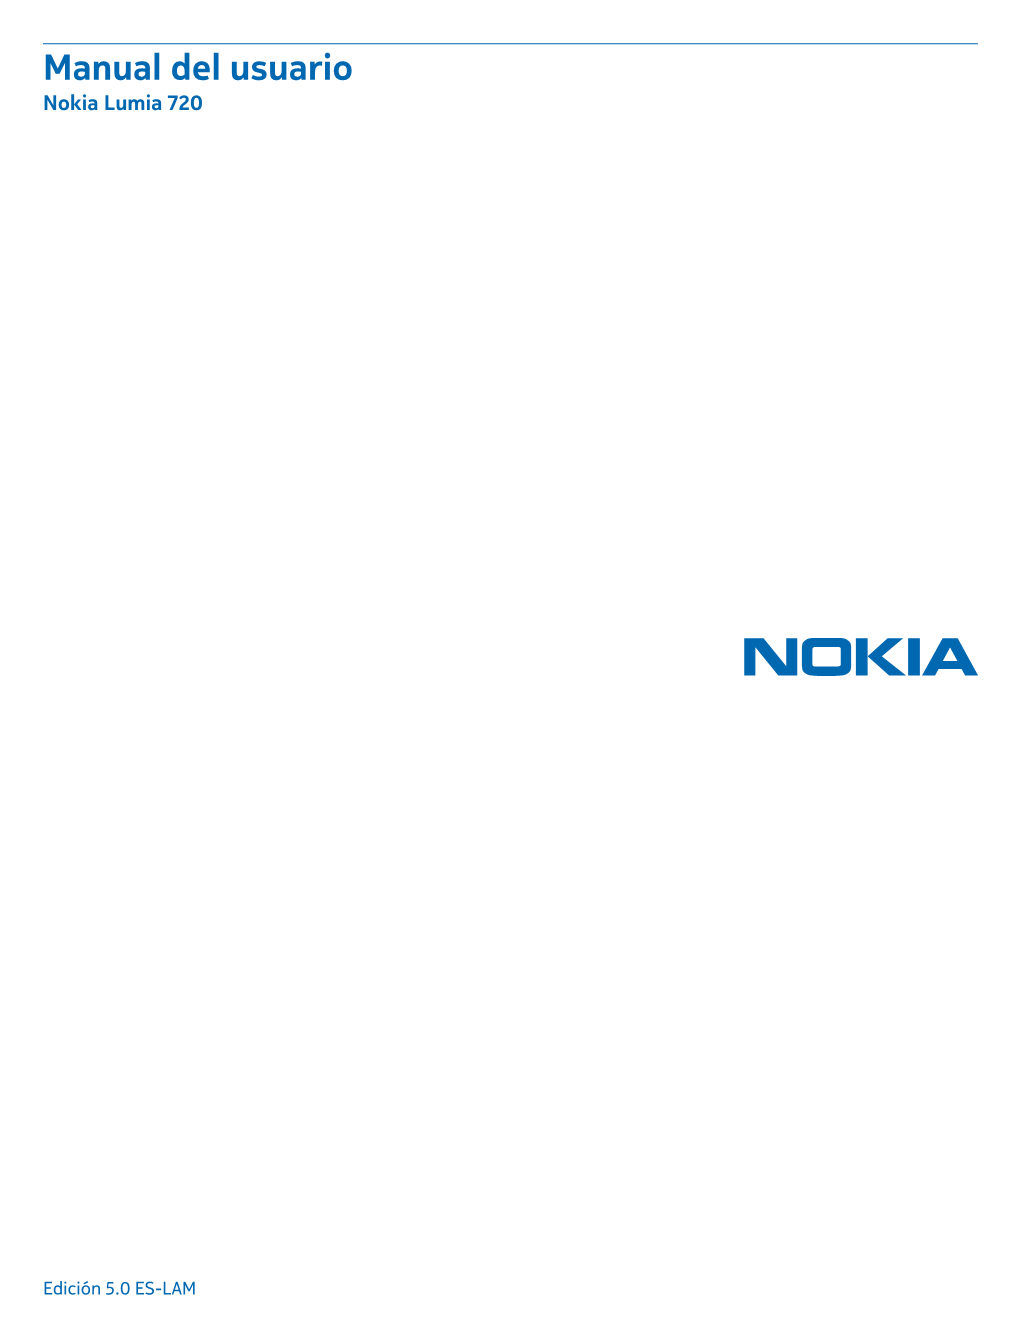 Manual Del Usuario Para Nokia Lumia